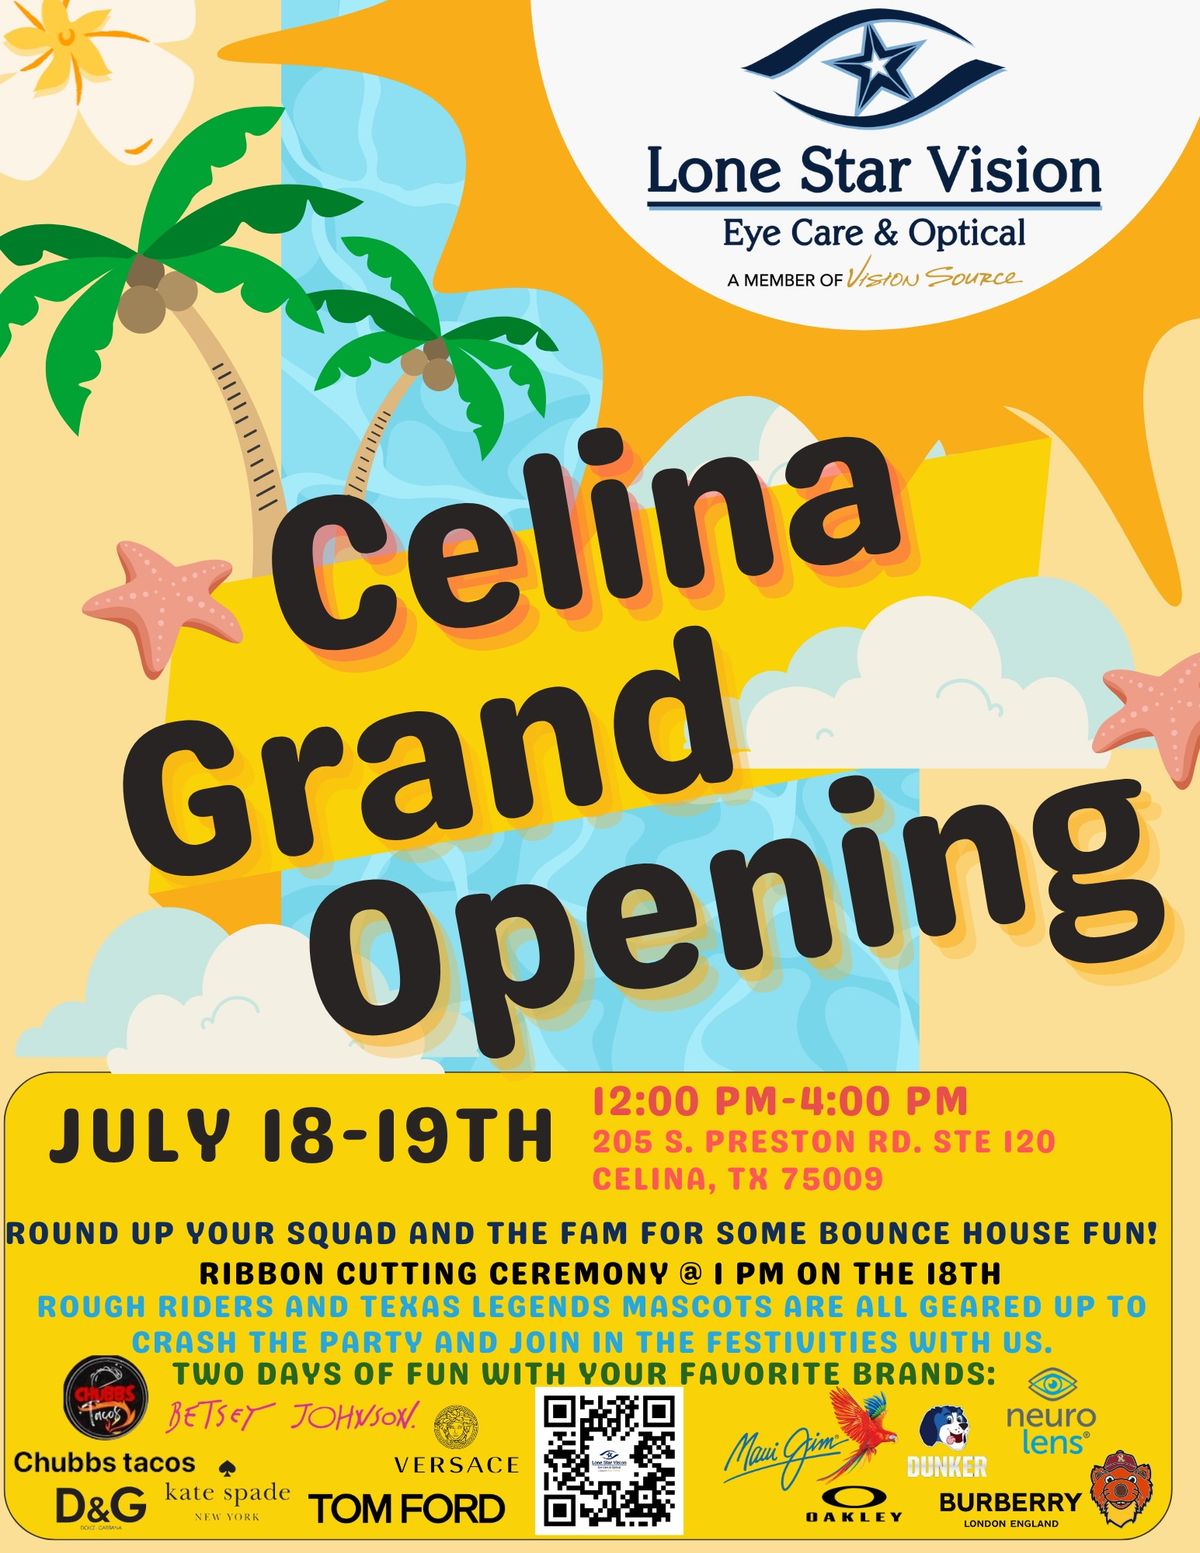 Celina grand opening!